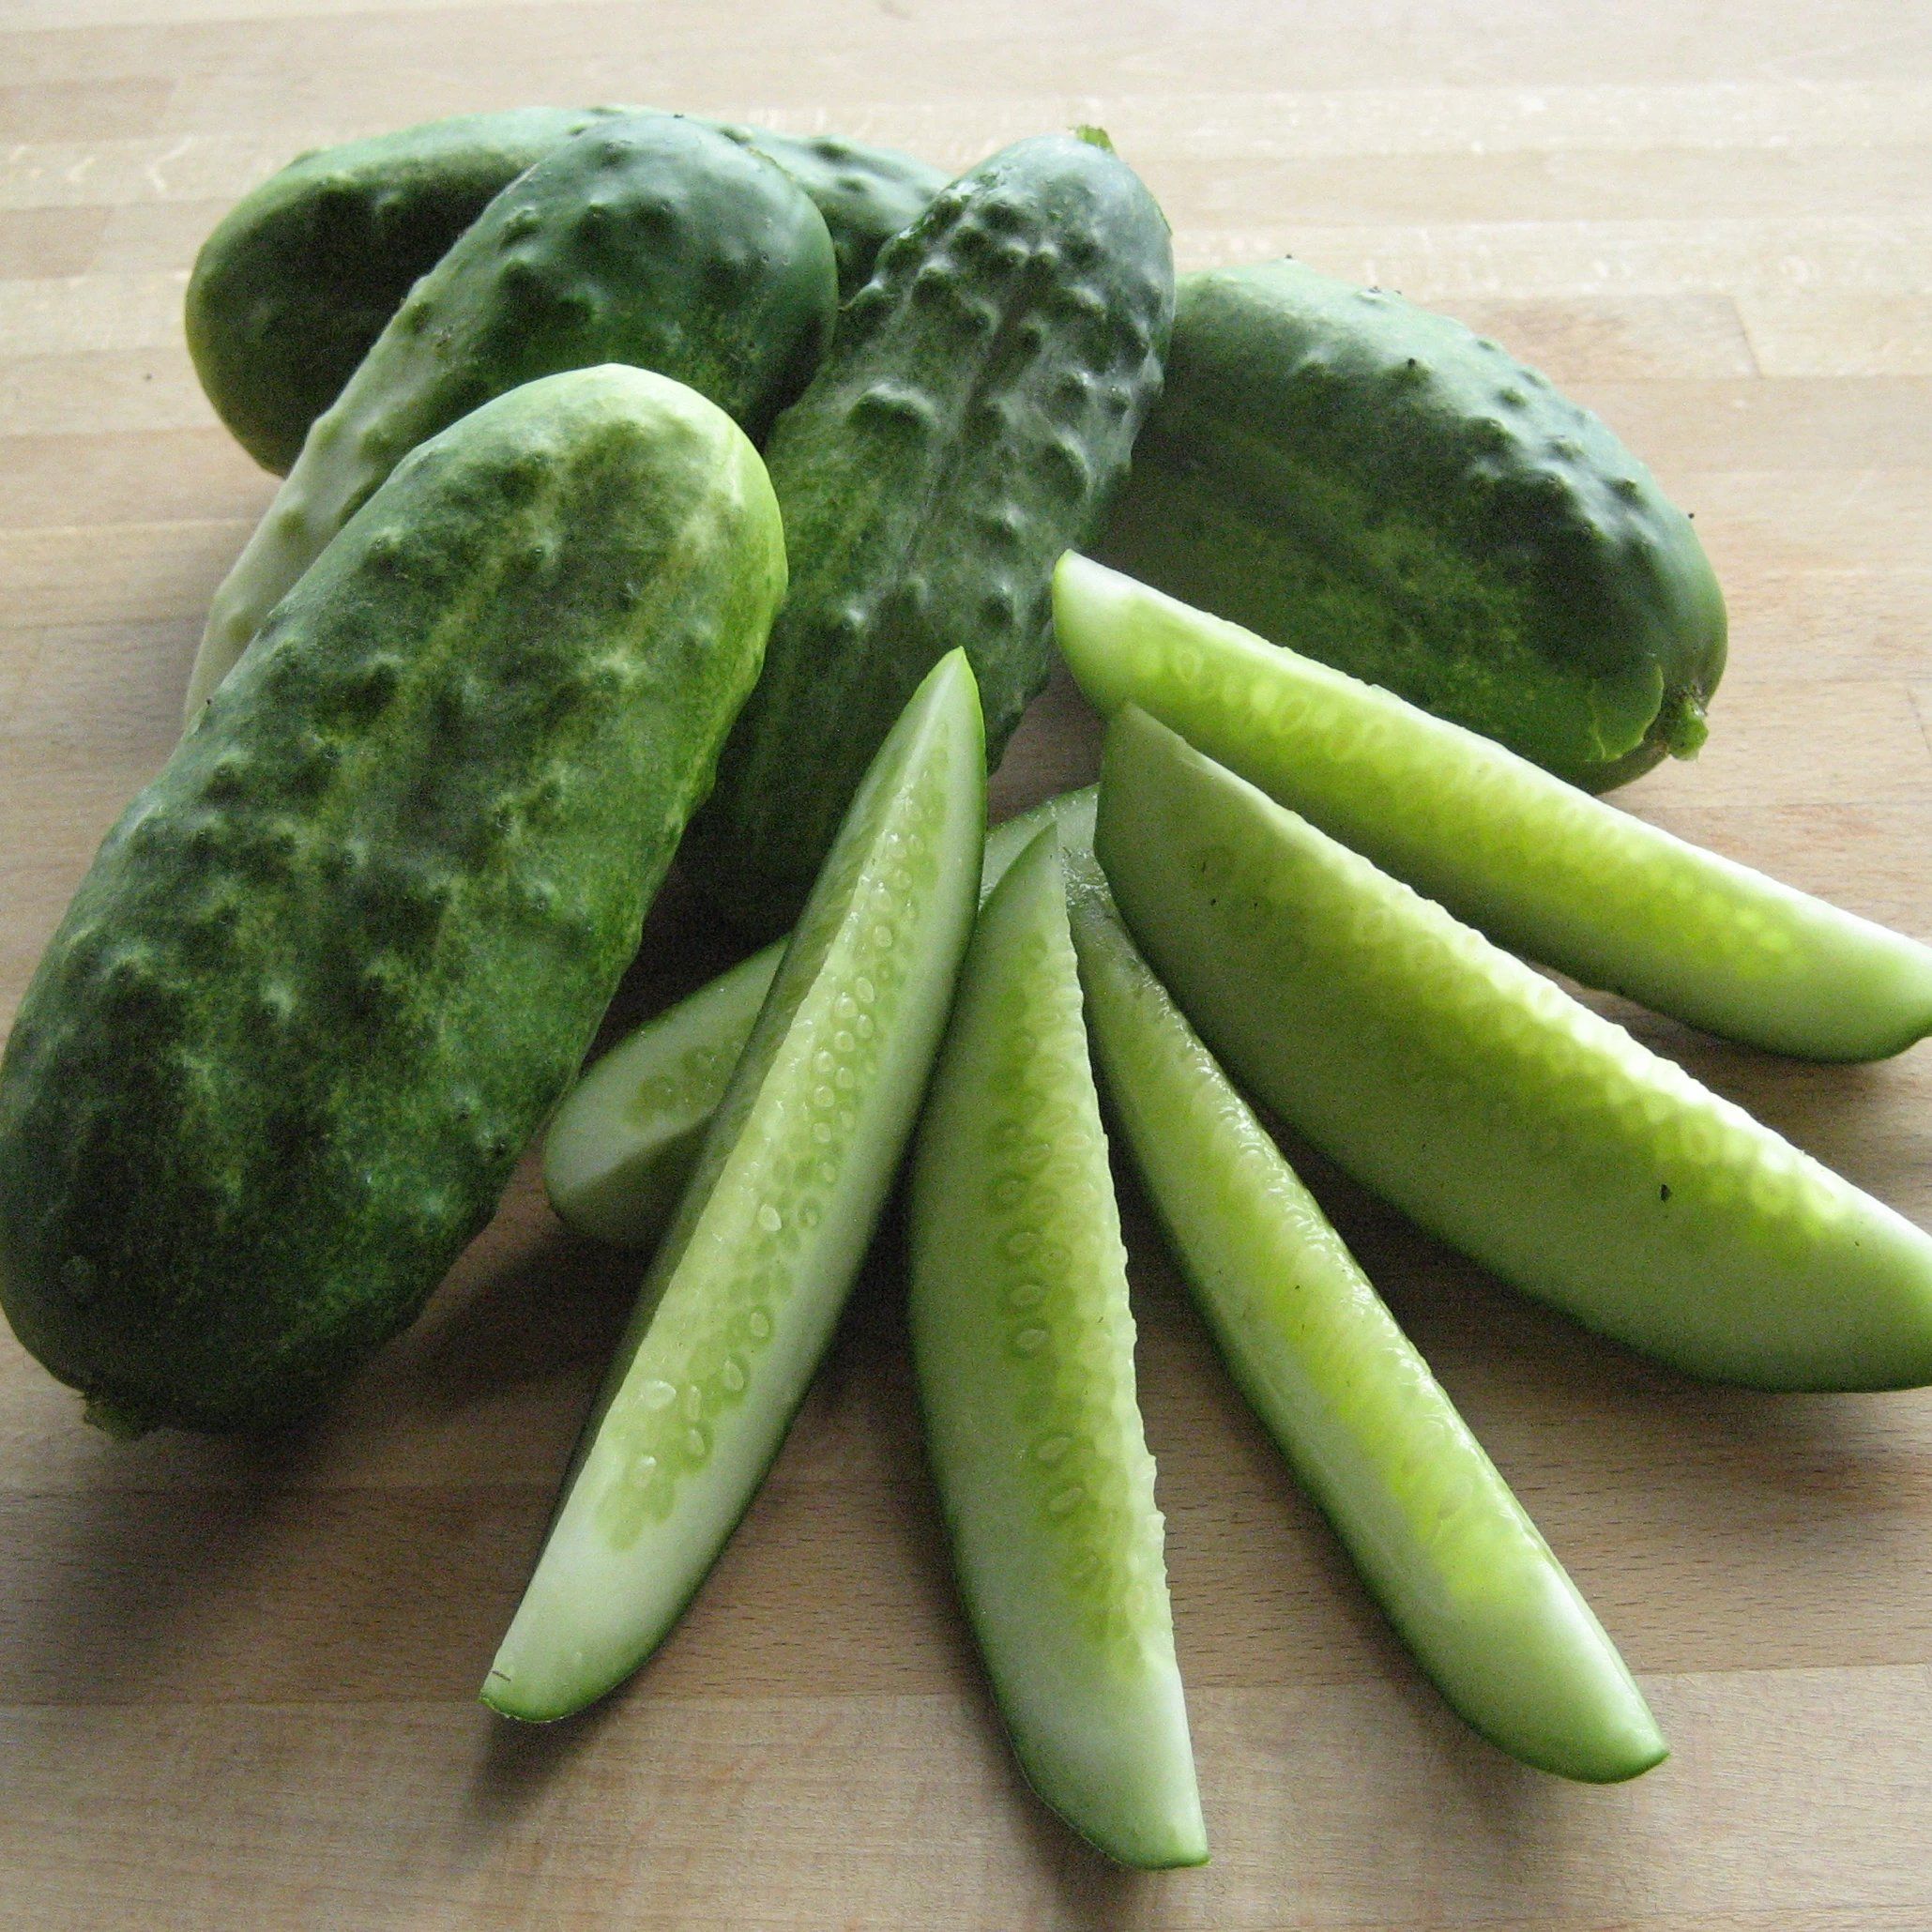 National Pickling Cucumber Organic Seeds - 75 Seeds